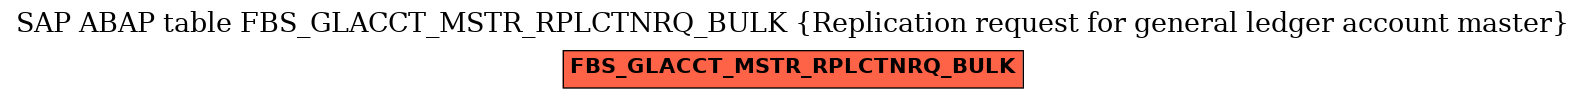 E-R Diagram for table FBS_GLACCT_MSTR_RPLCTNRQ_BULK (Replication request for general ledger account master)